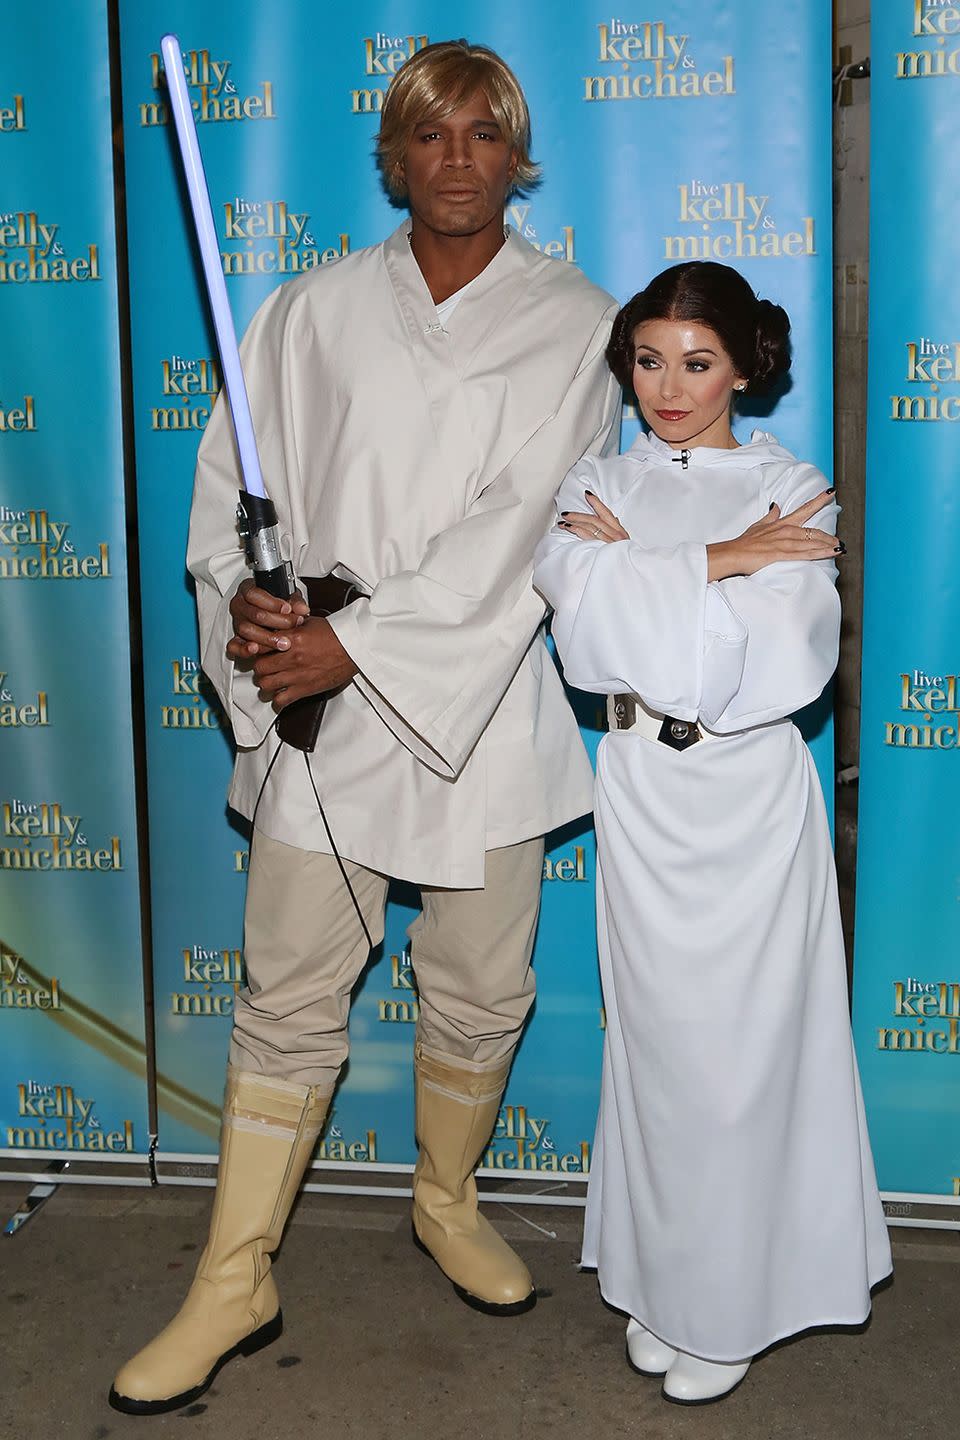 Michael Strahan and Kelly Ripa - Luke Skywalker and Princess Leia